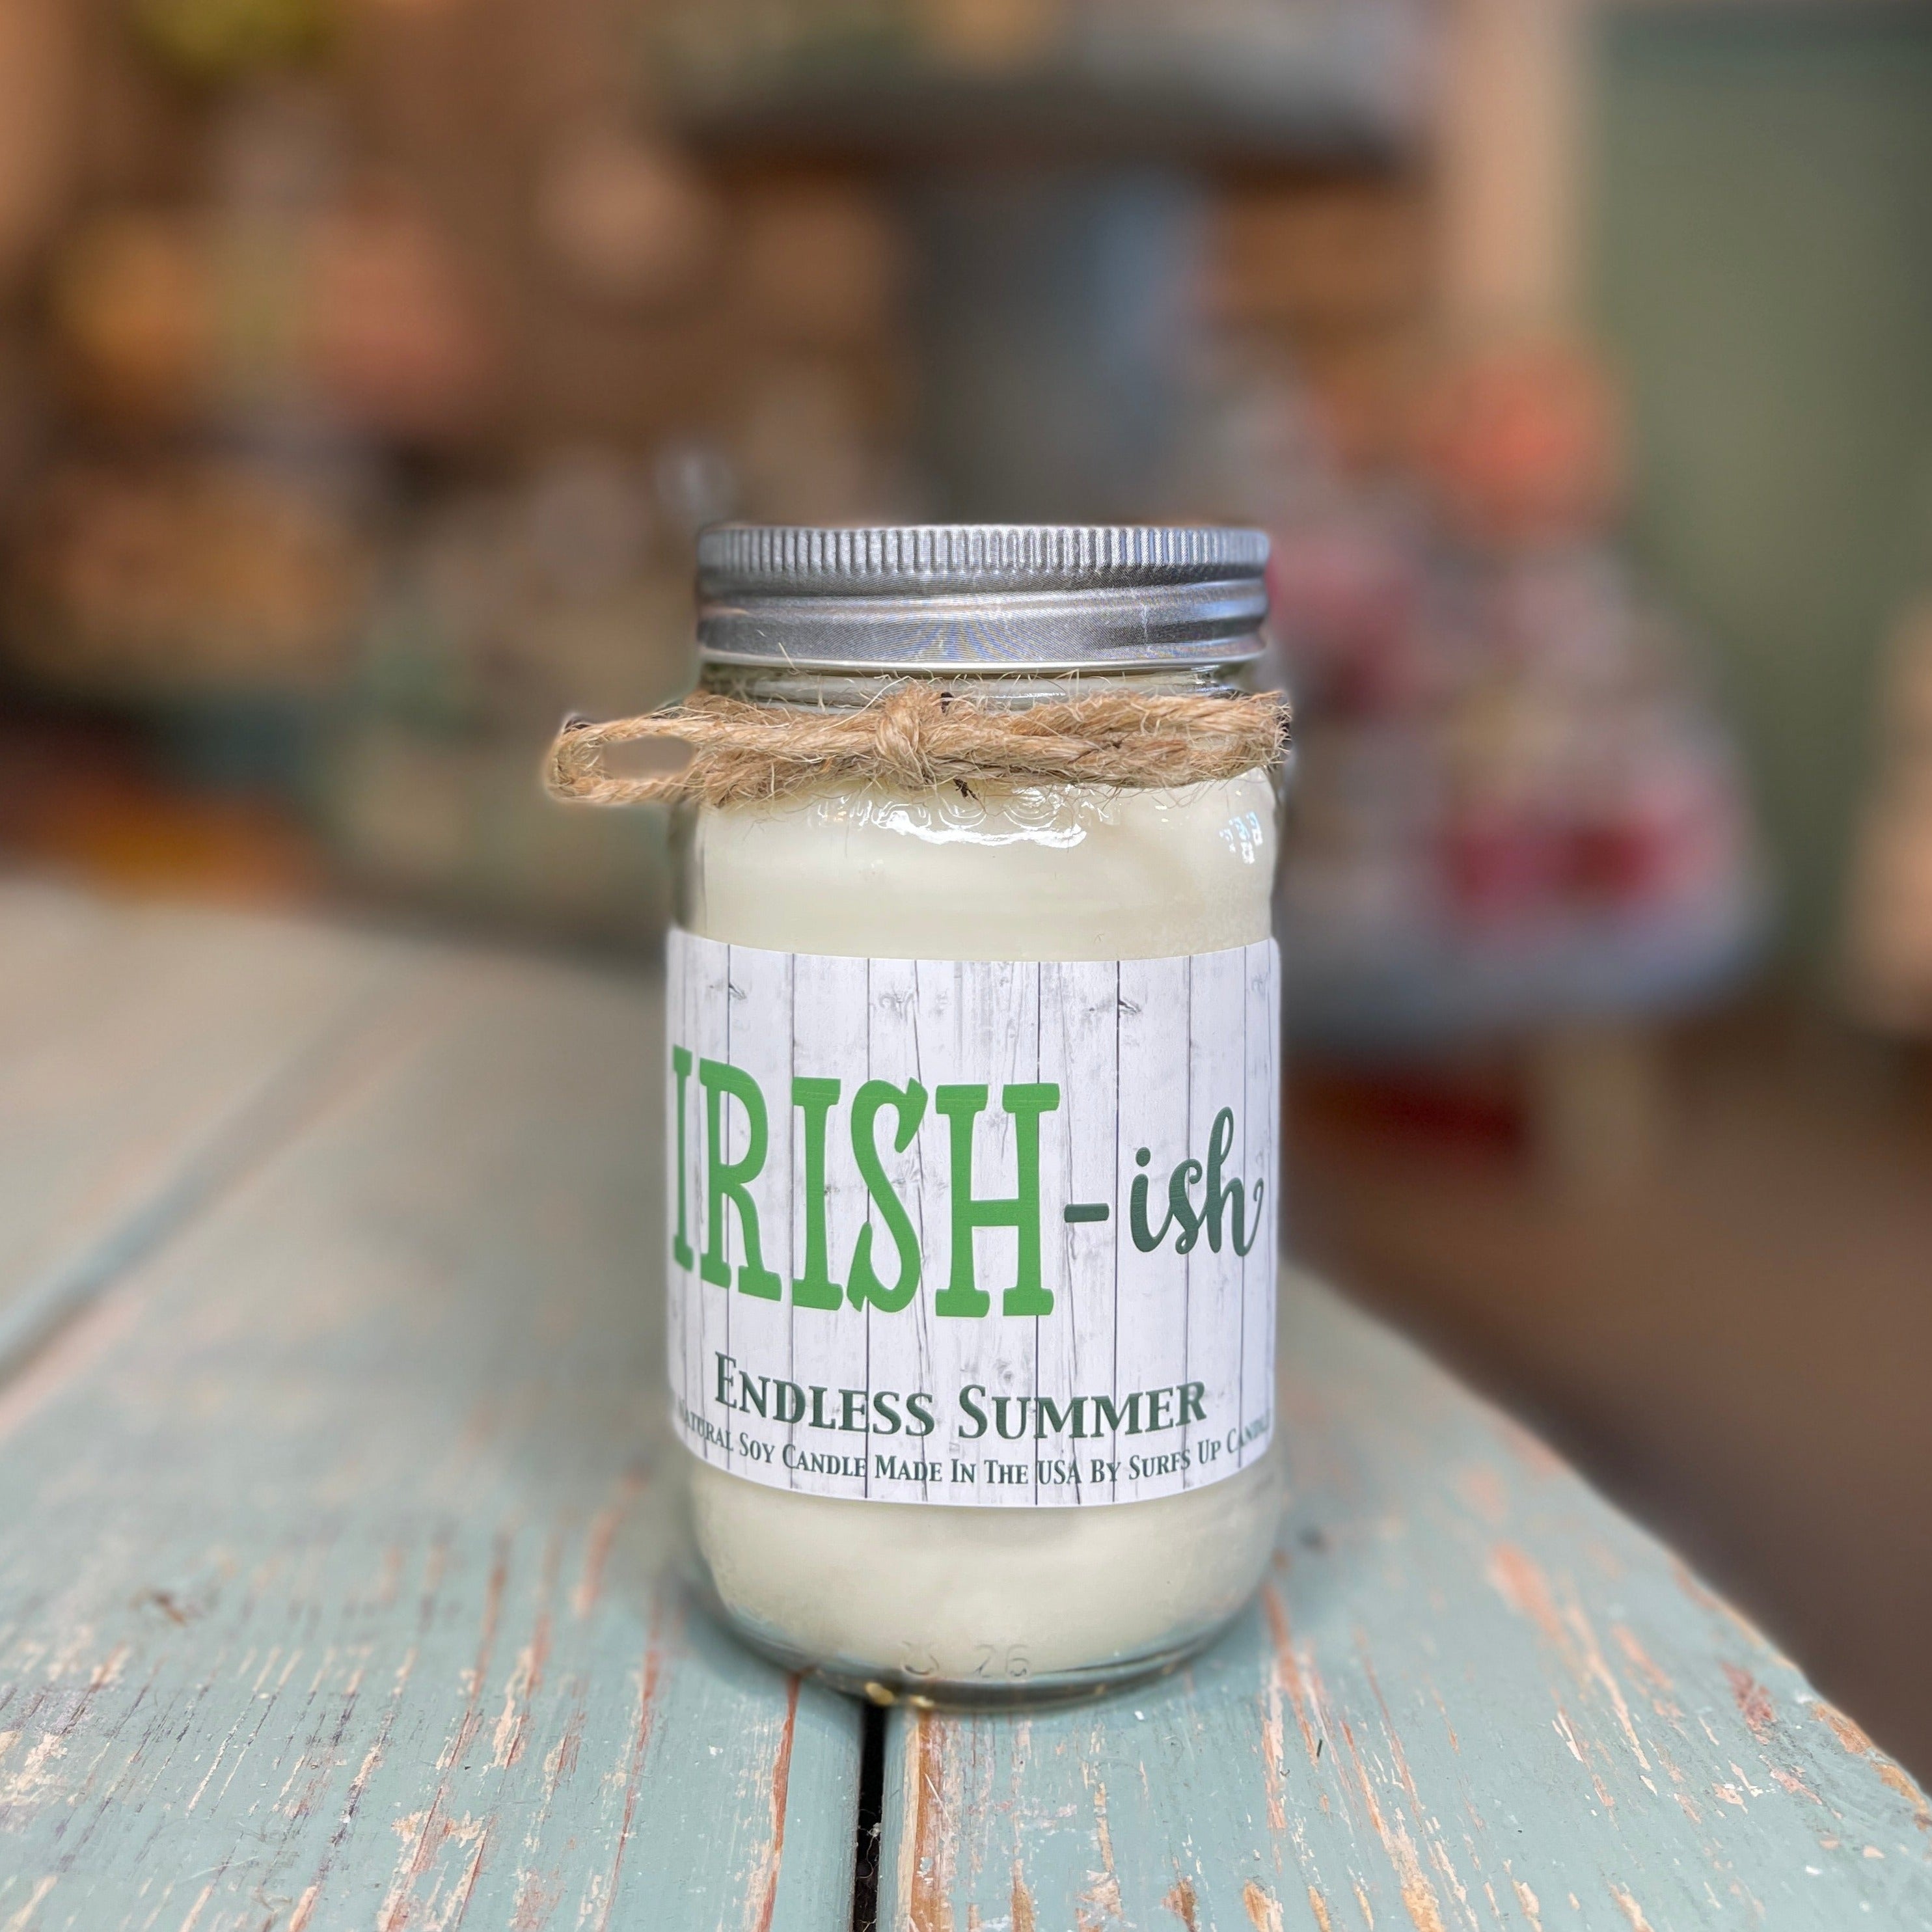 IRISH-ish Endless Summer Mason Jar Candle - St. Patrick's Day Collection